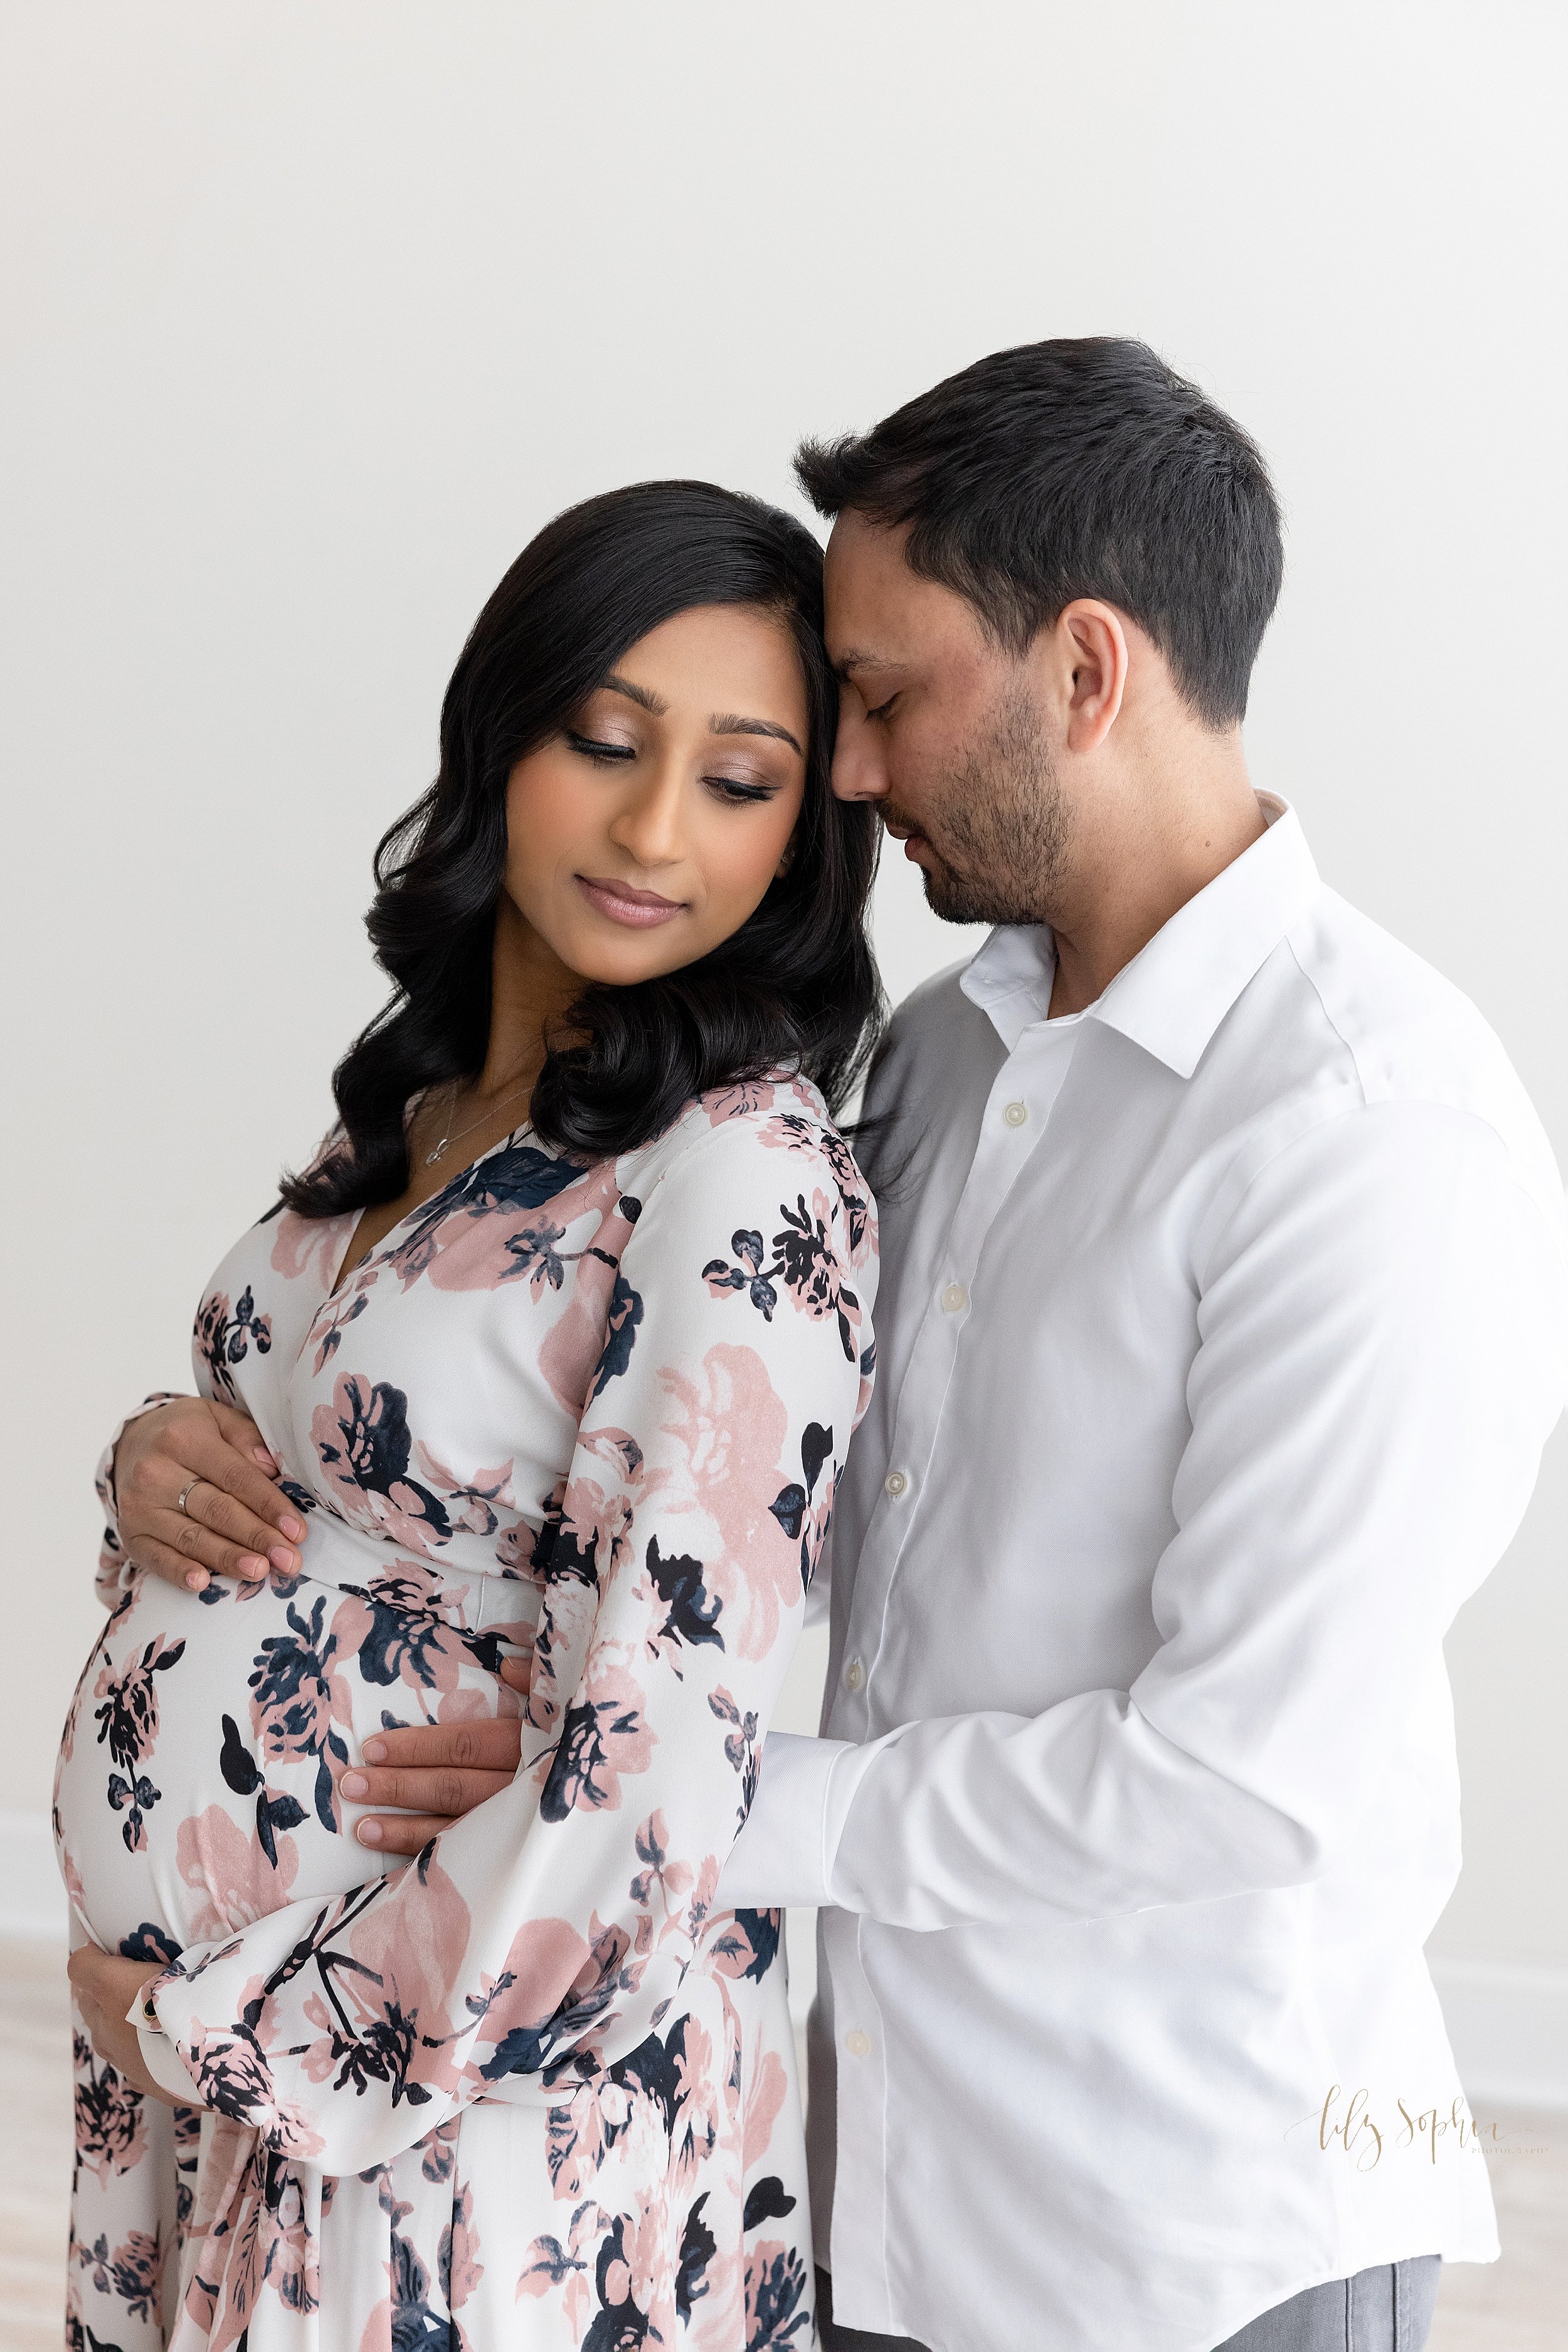 intown-atlanta-grant-park-decatur-oakhurst-duwoody-indian-couple-maternity-photoshoot-baby-girl-pregnancy_2680.jpg